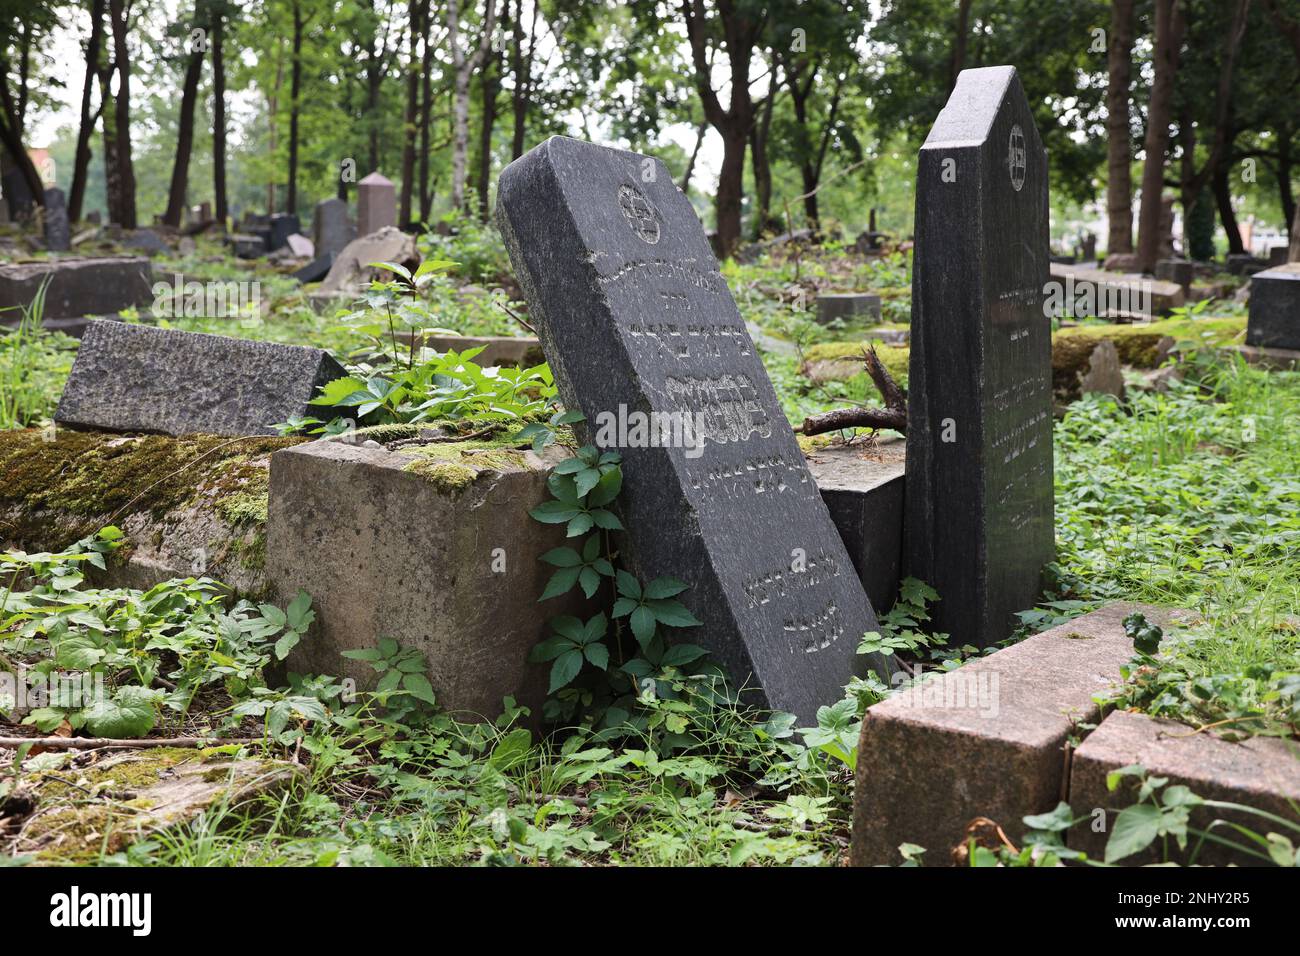 This photo depicts a toppled tombstone on the Žaliakalnio žydų senosios kapinės, a Jewish cemetery in Kaunas, Lithuania. The fallen grave marker is a Stock Photo